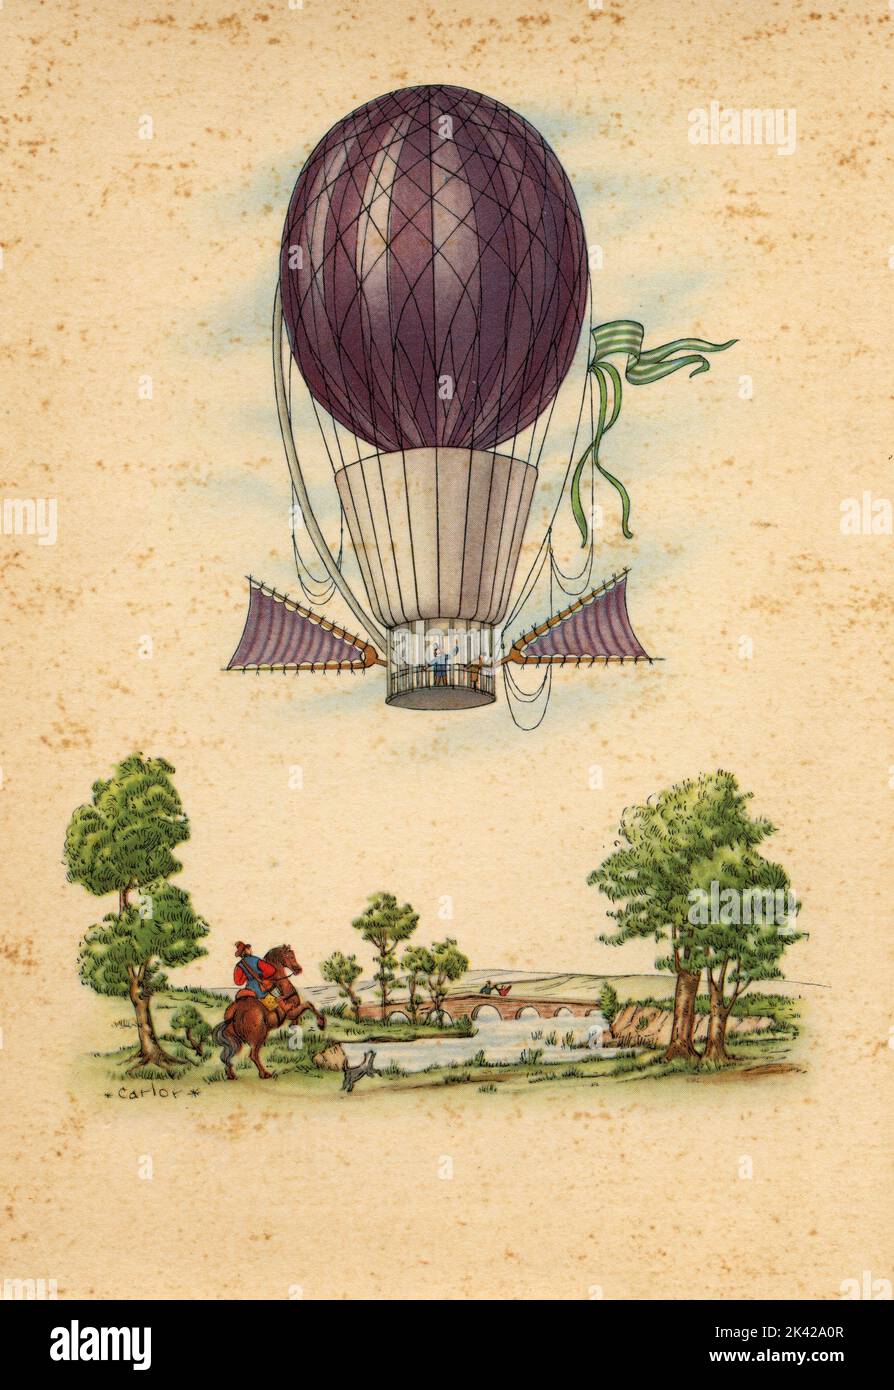 Illustration de l'ascension avec le ballon d'air chaud de Zambeccari, Italie 1804 Banque D'Images